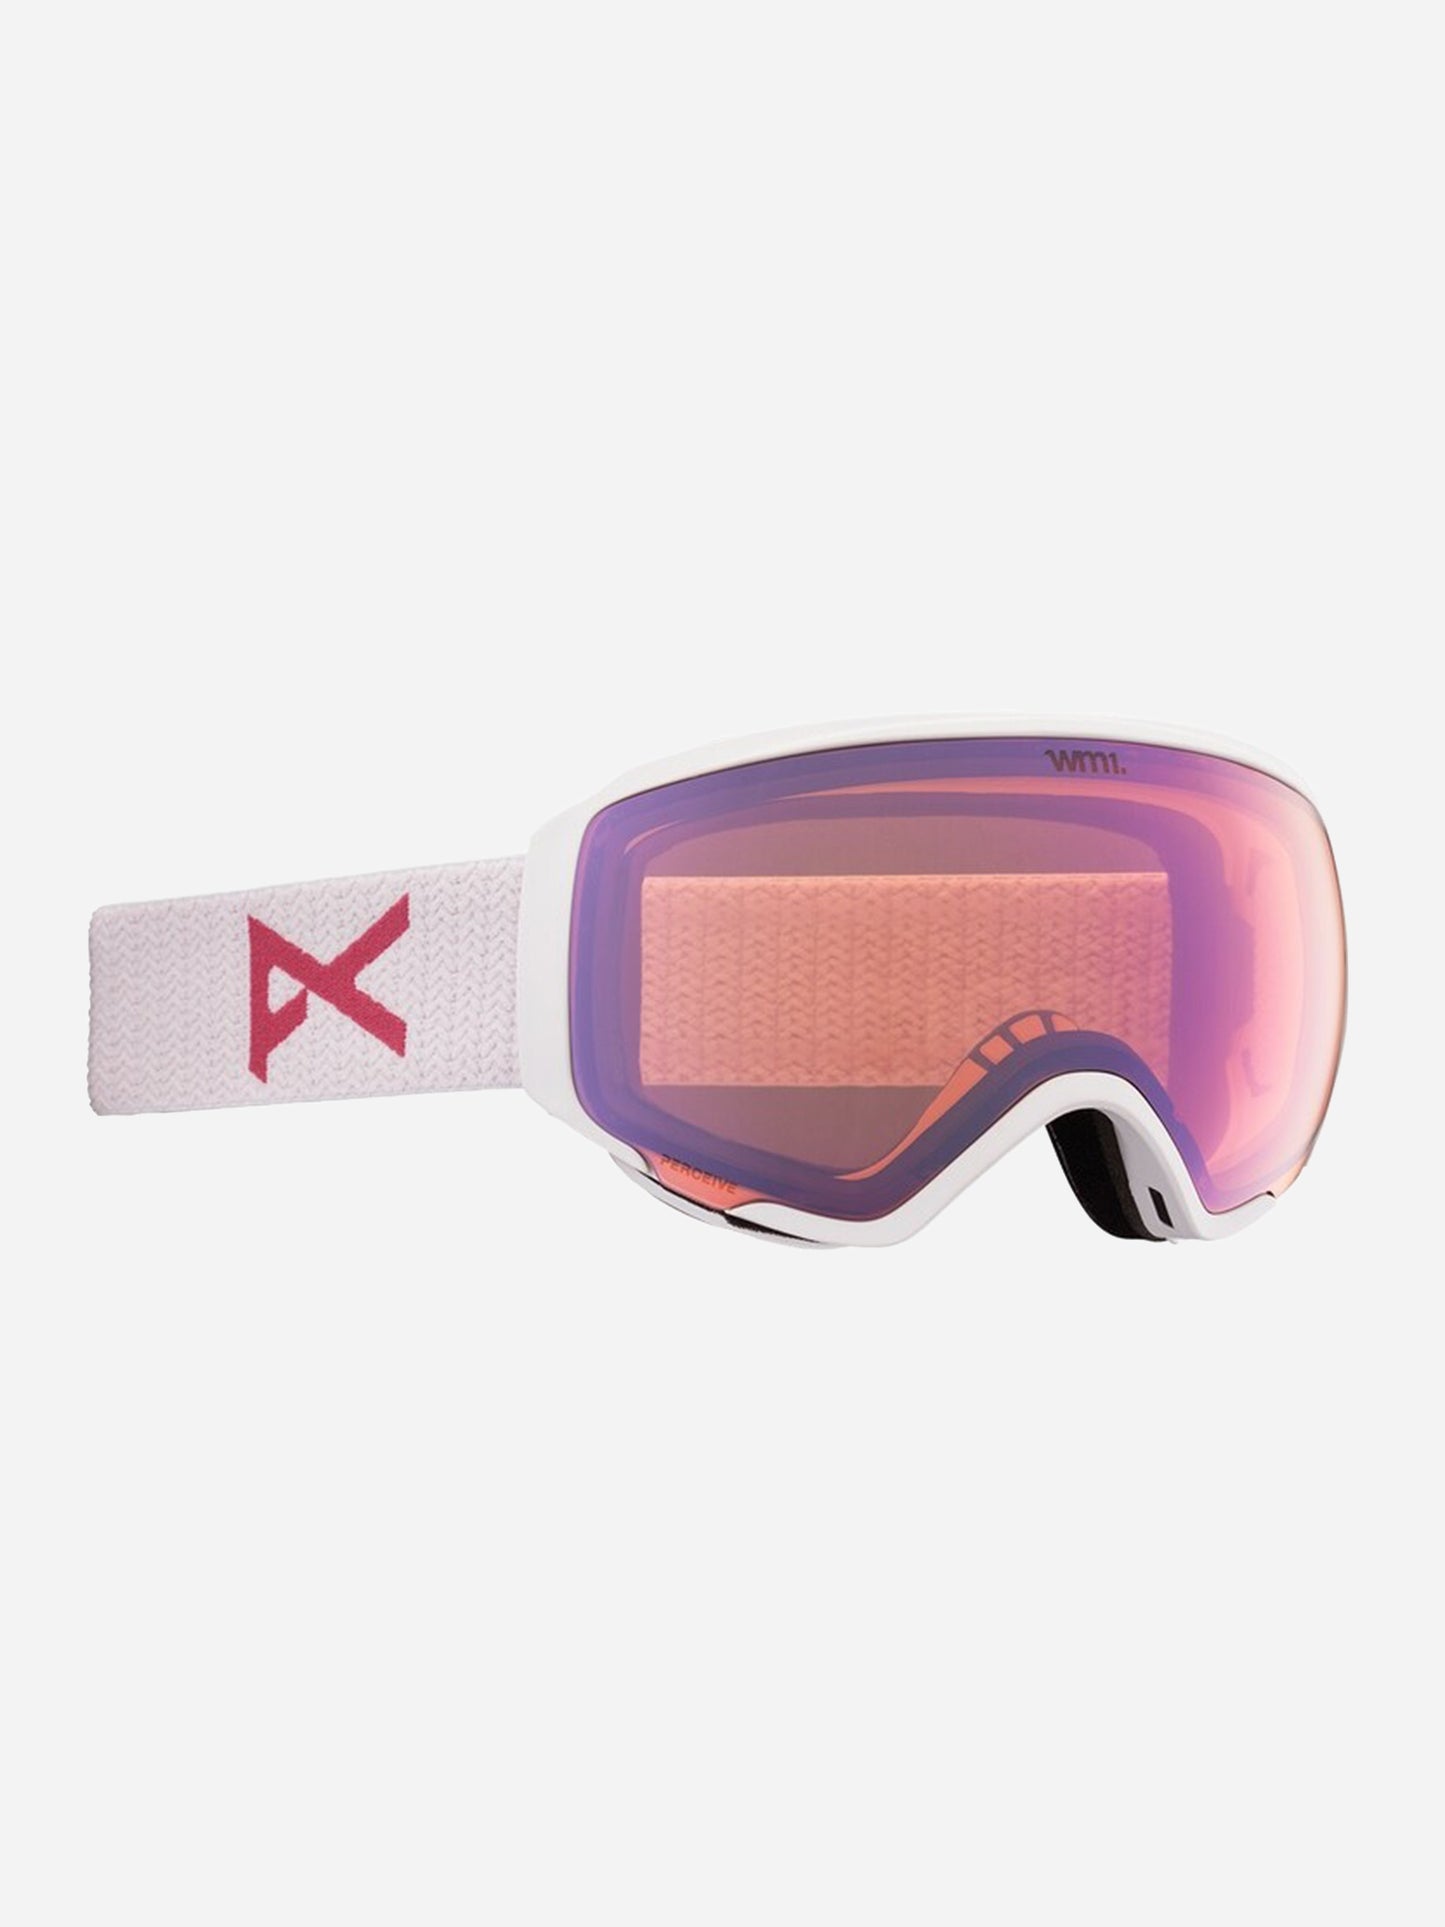 Anon Women's WM1 Ski Goggle